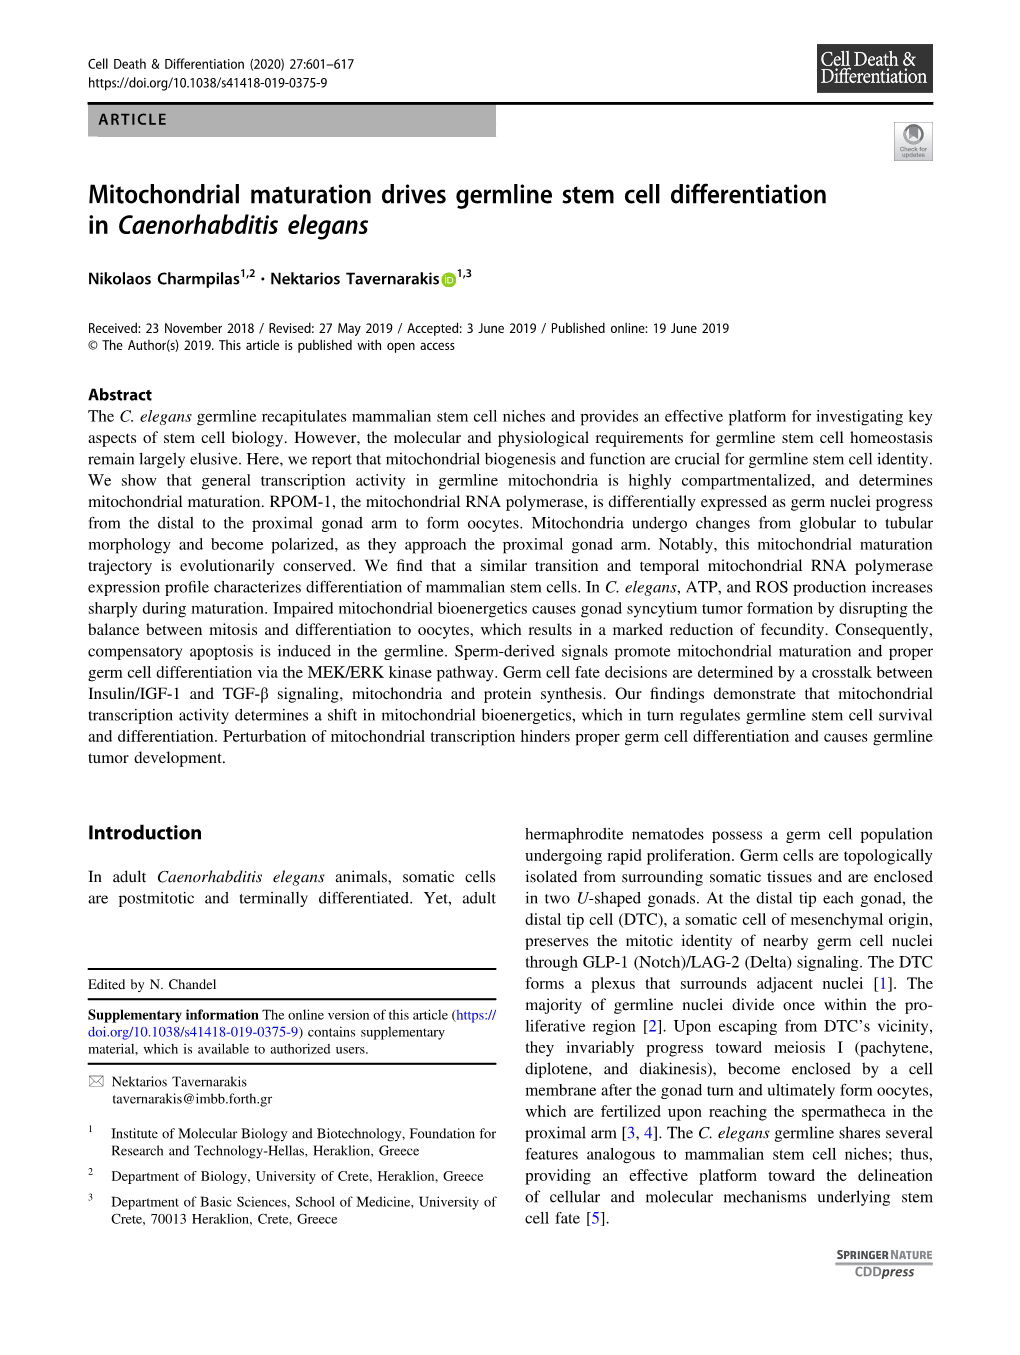 Mitochondrial Maturation Drives Germline Stem Cell Differentiation in Caenorhabditis Elegans